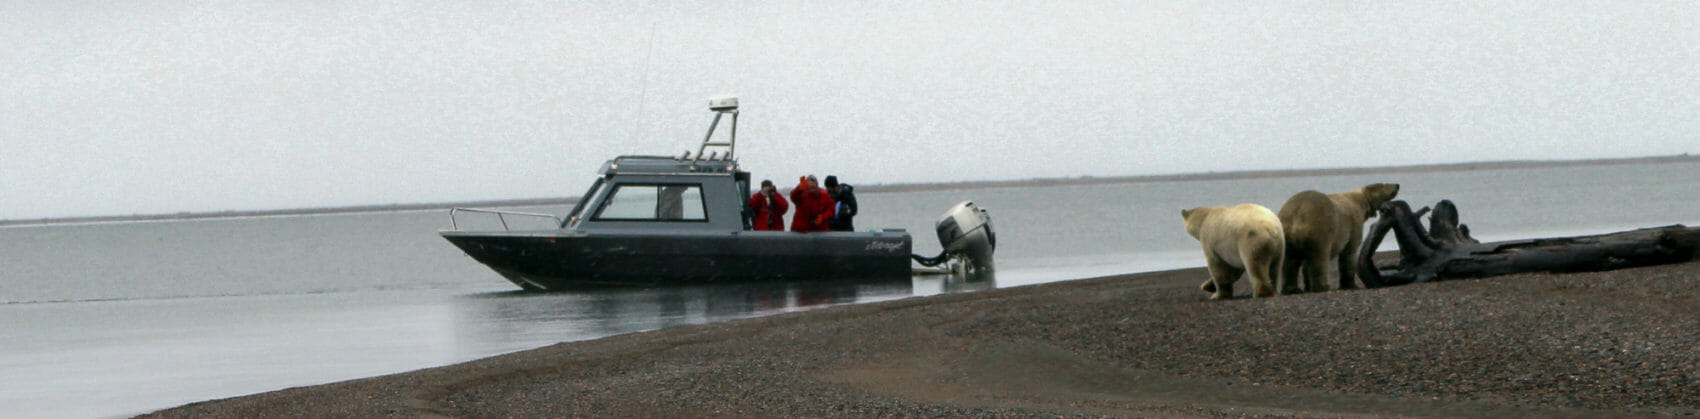 photographers and polar bears in kaktovik alaska